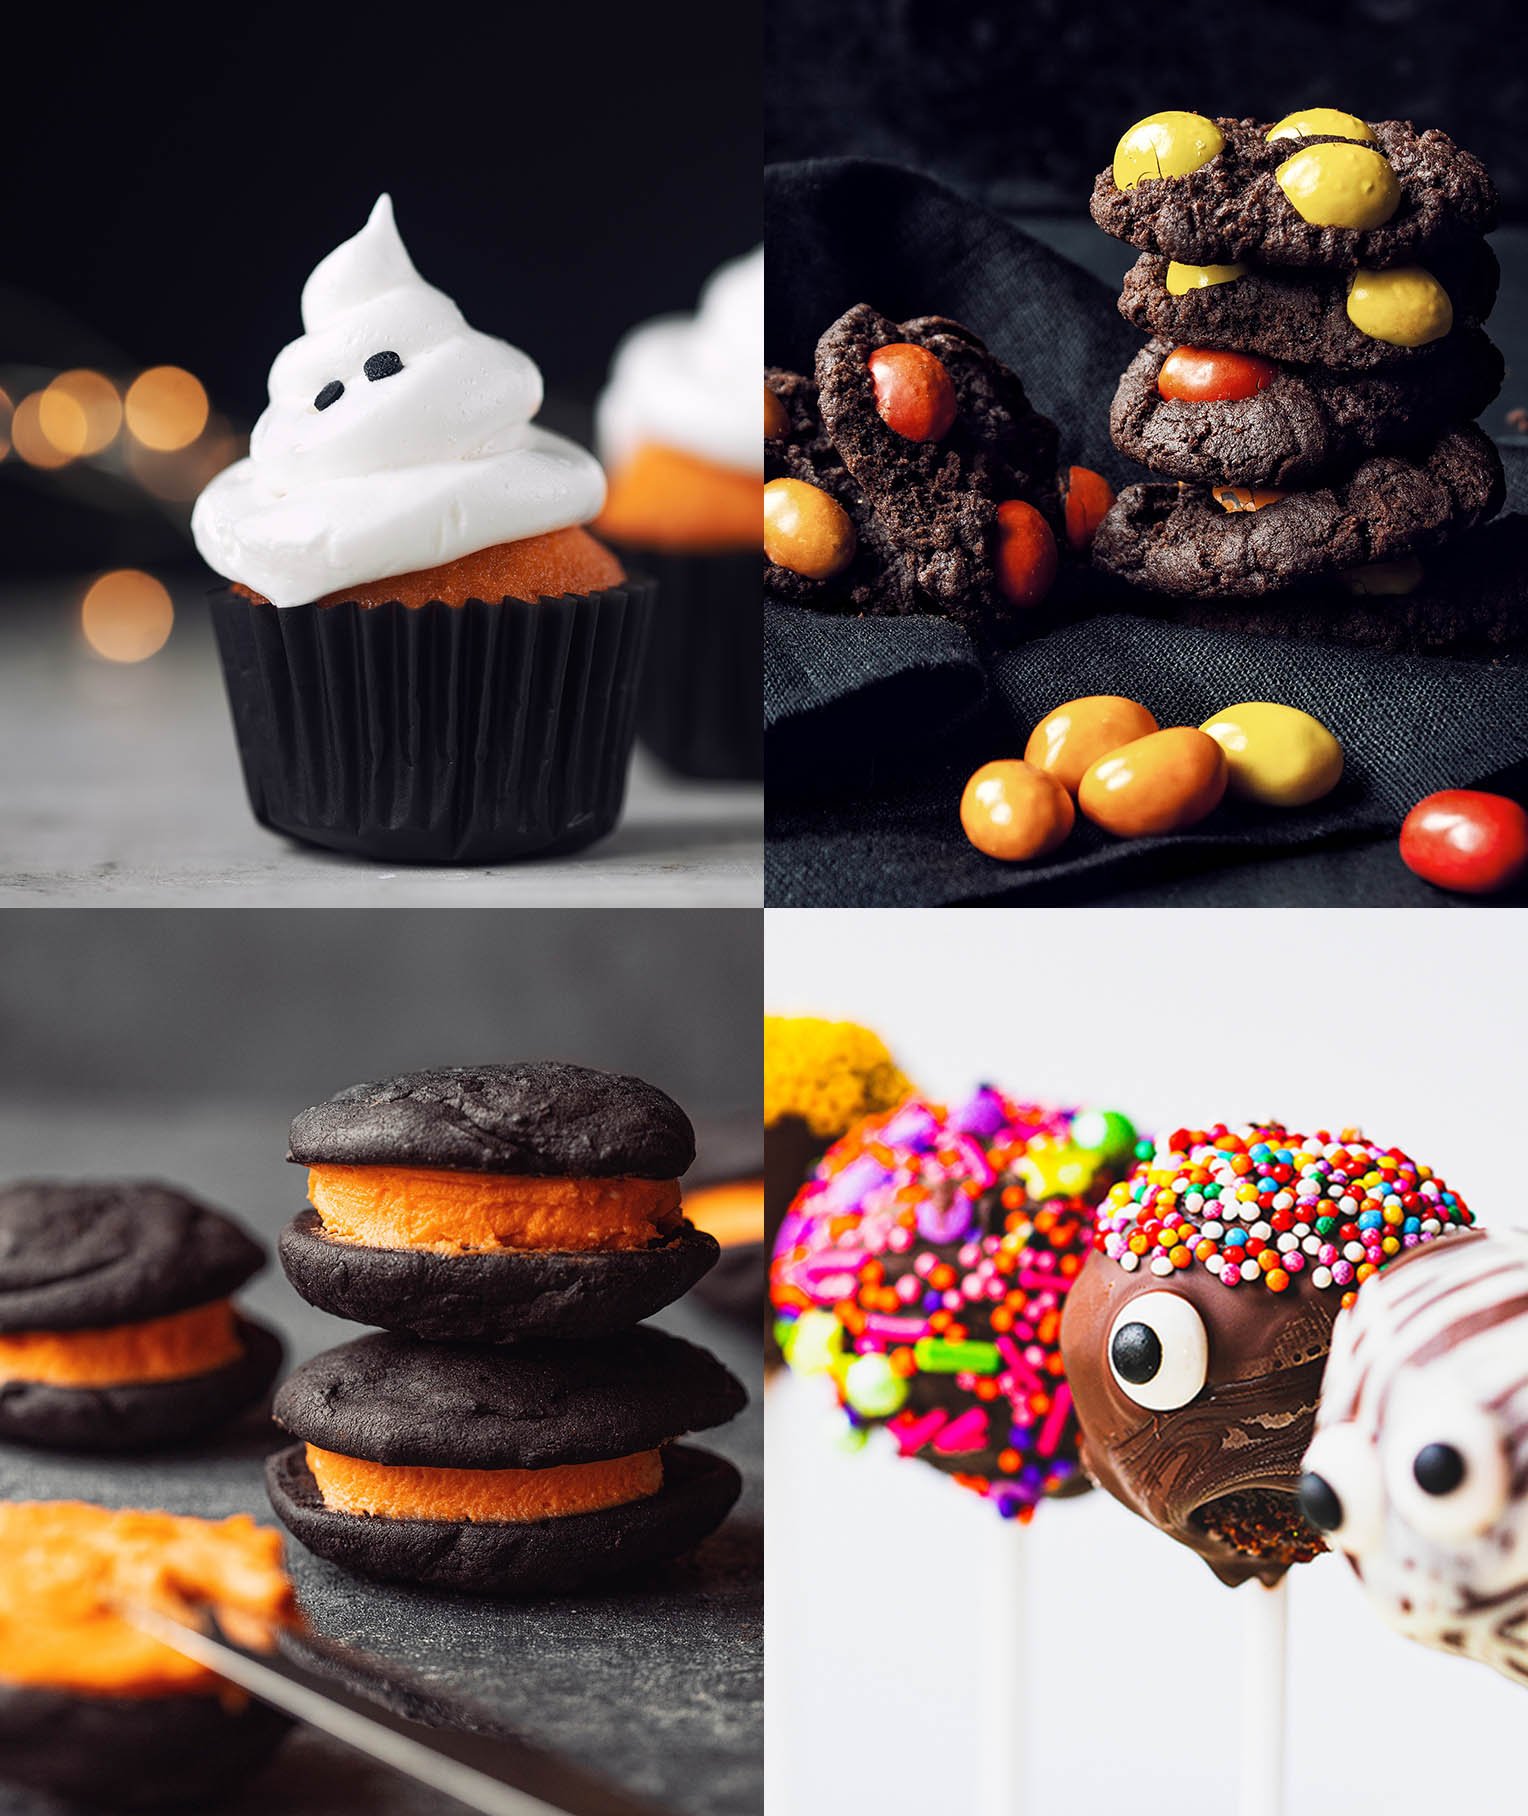 4 Spooky Halloween Treats